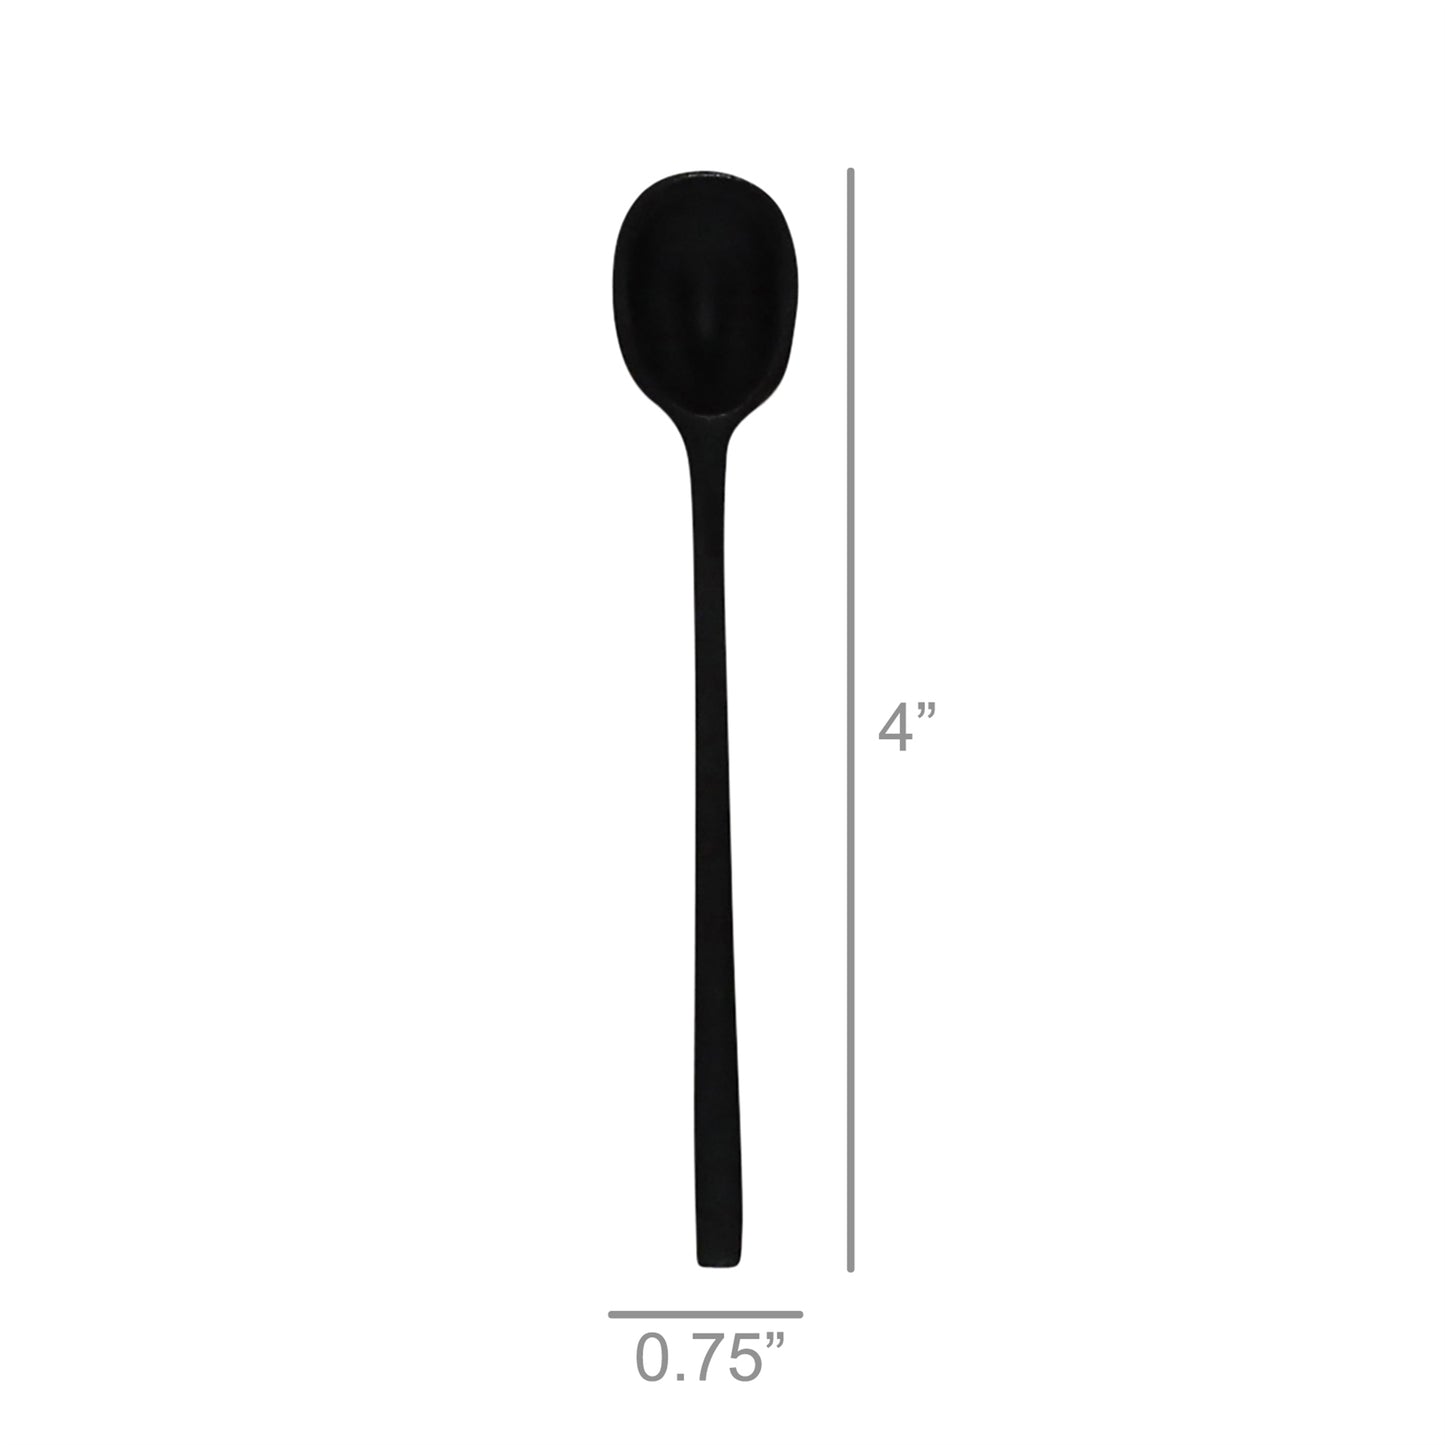 Duval Spoon, Black Zinc - Sm